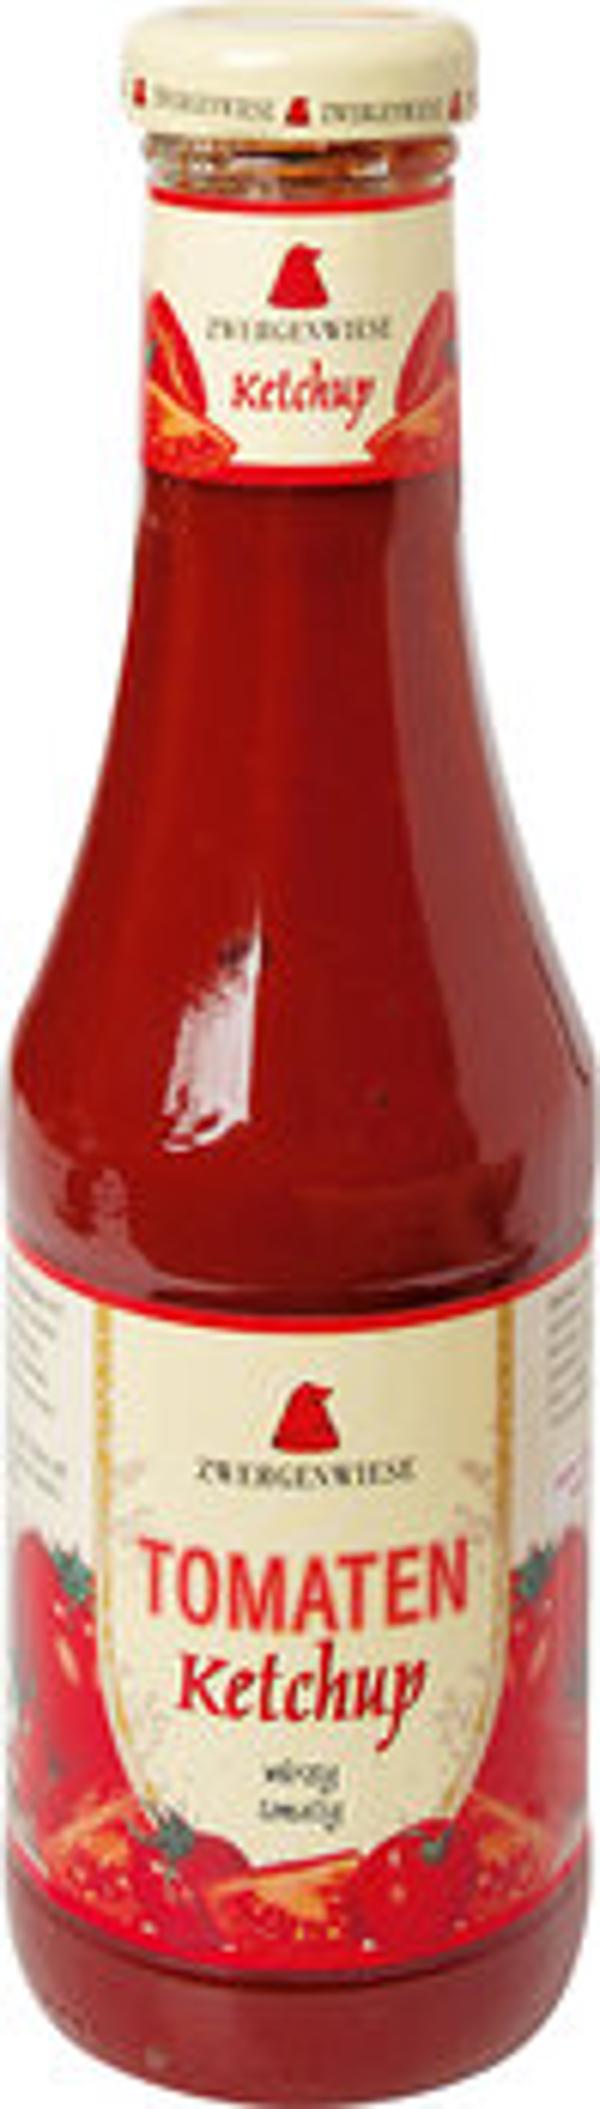 Produktfoto zu Tomaten Ketchup 500ml